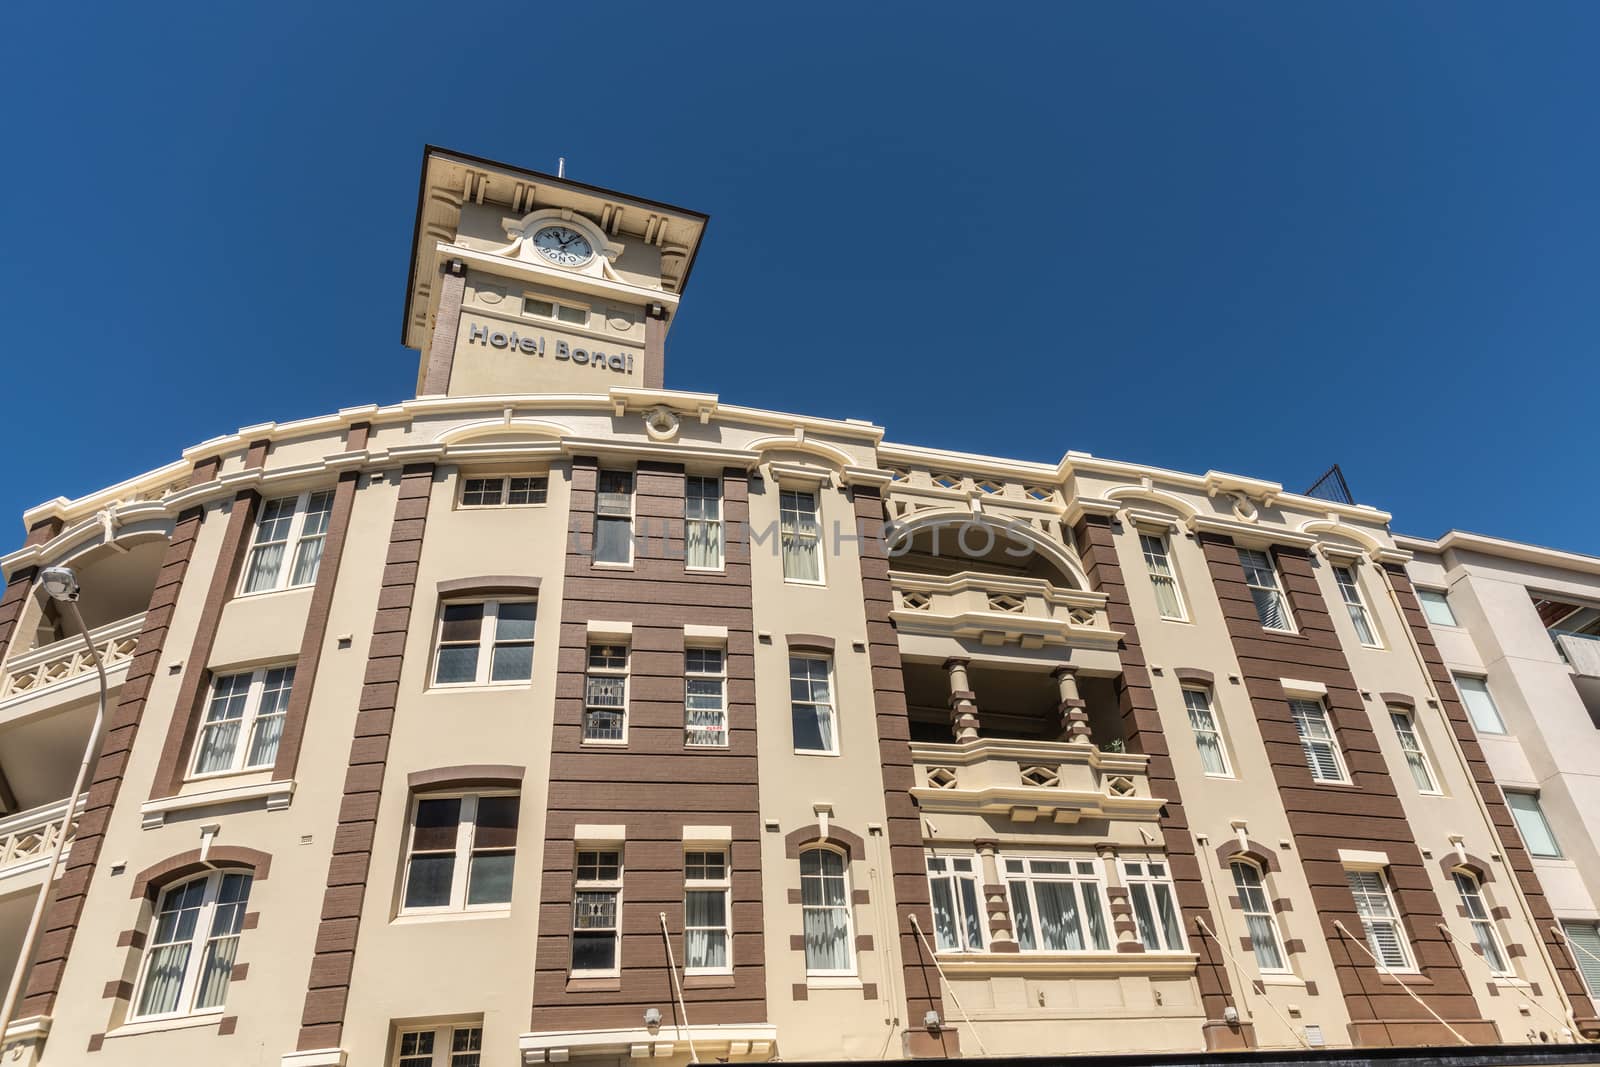 Sydney, Australia - February 11, 2019: Yellow and brown Bondi Hotel facade and clock tower under blue sky in Bondi Beach.